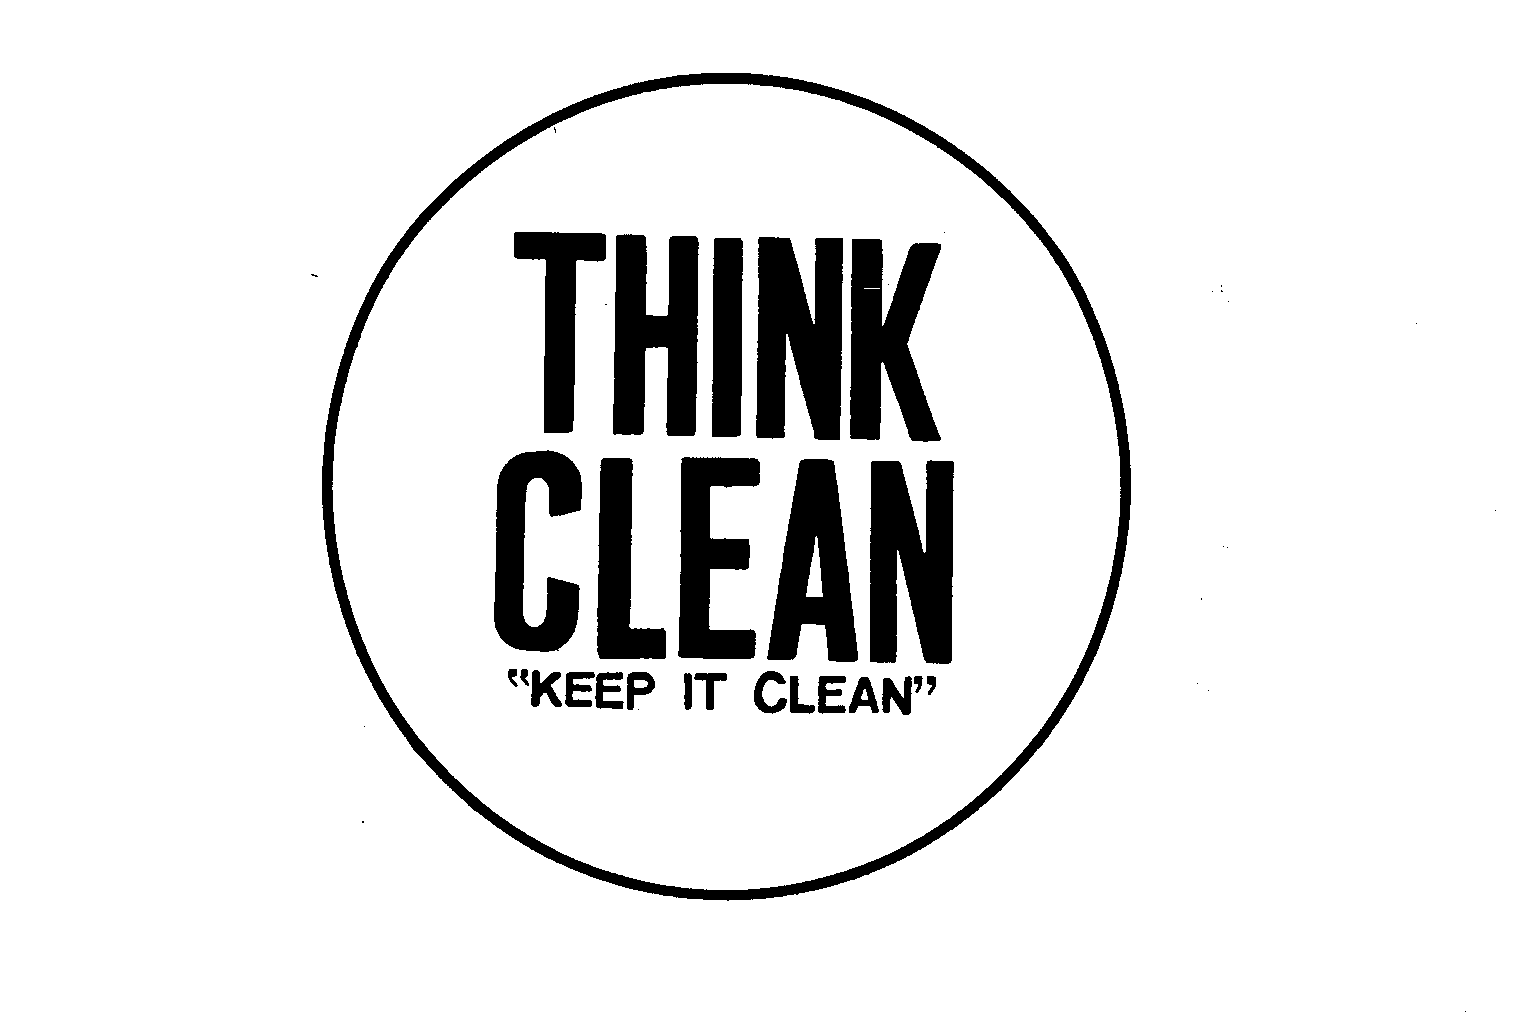  THINK CLEAN "KEEP IT CLEAN"